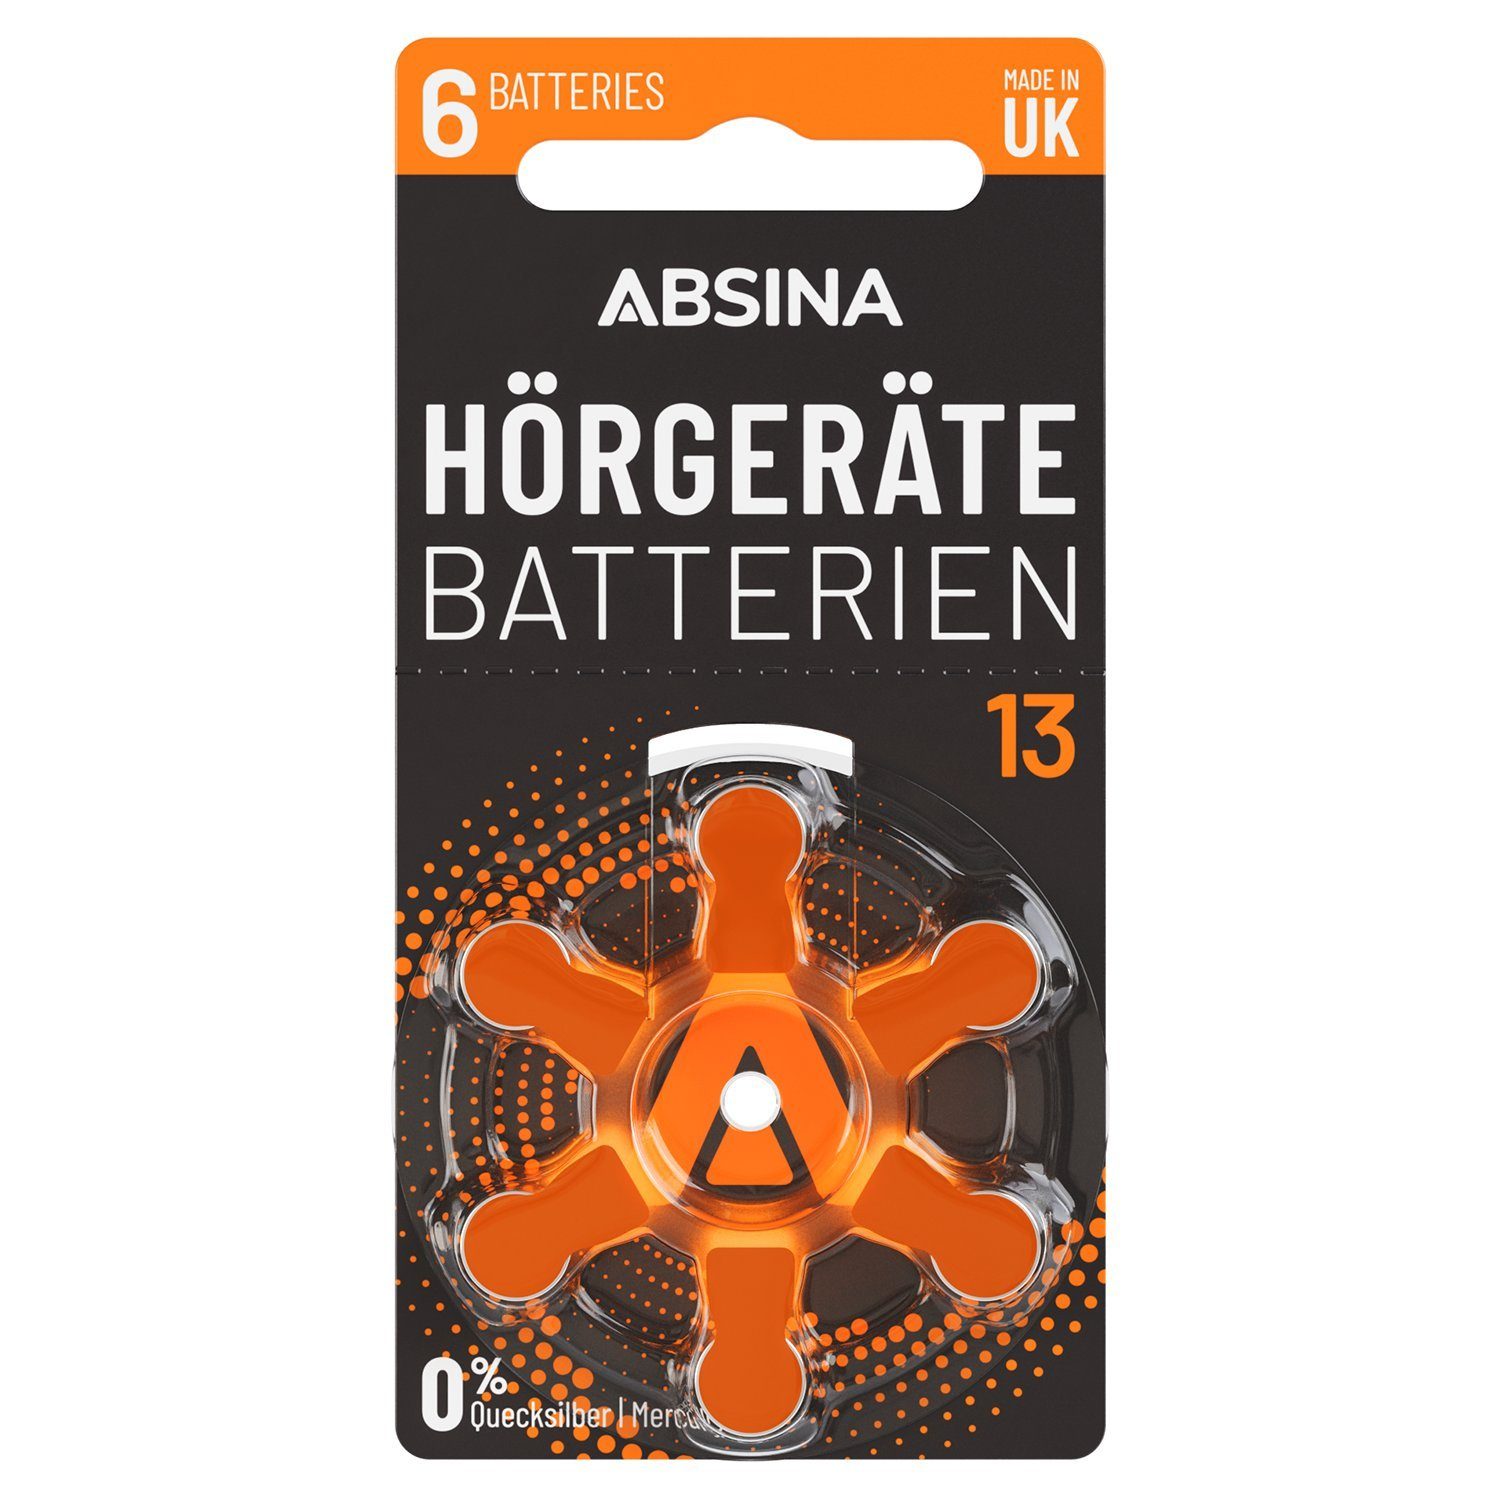 ABSINA 6x Hörgerätebatterien 13 - Hörgeräte Batterien orange 13 PR48 ZL2 P13 Knopfzelle, (1 St)